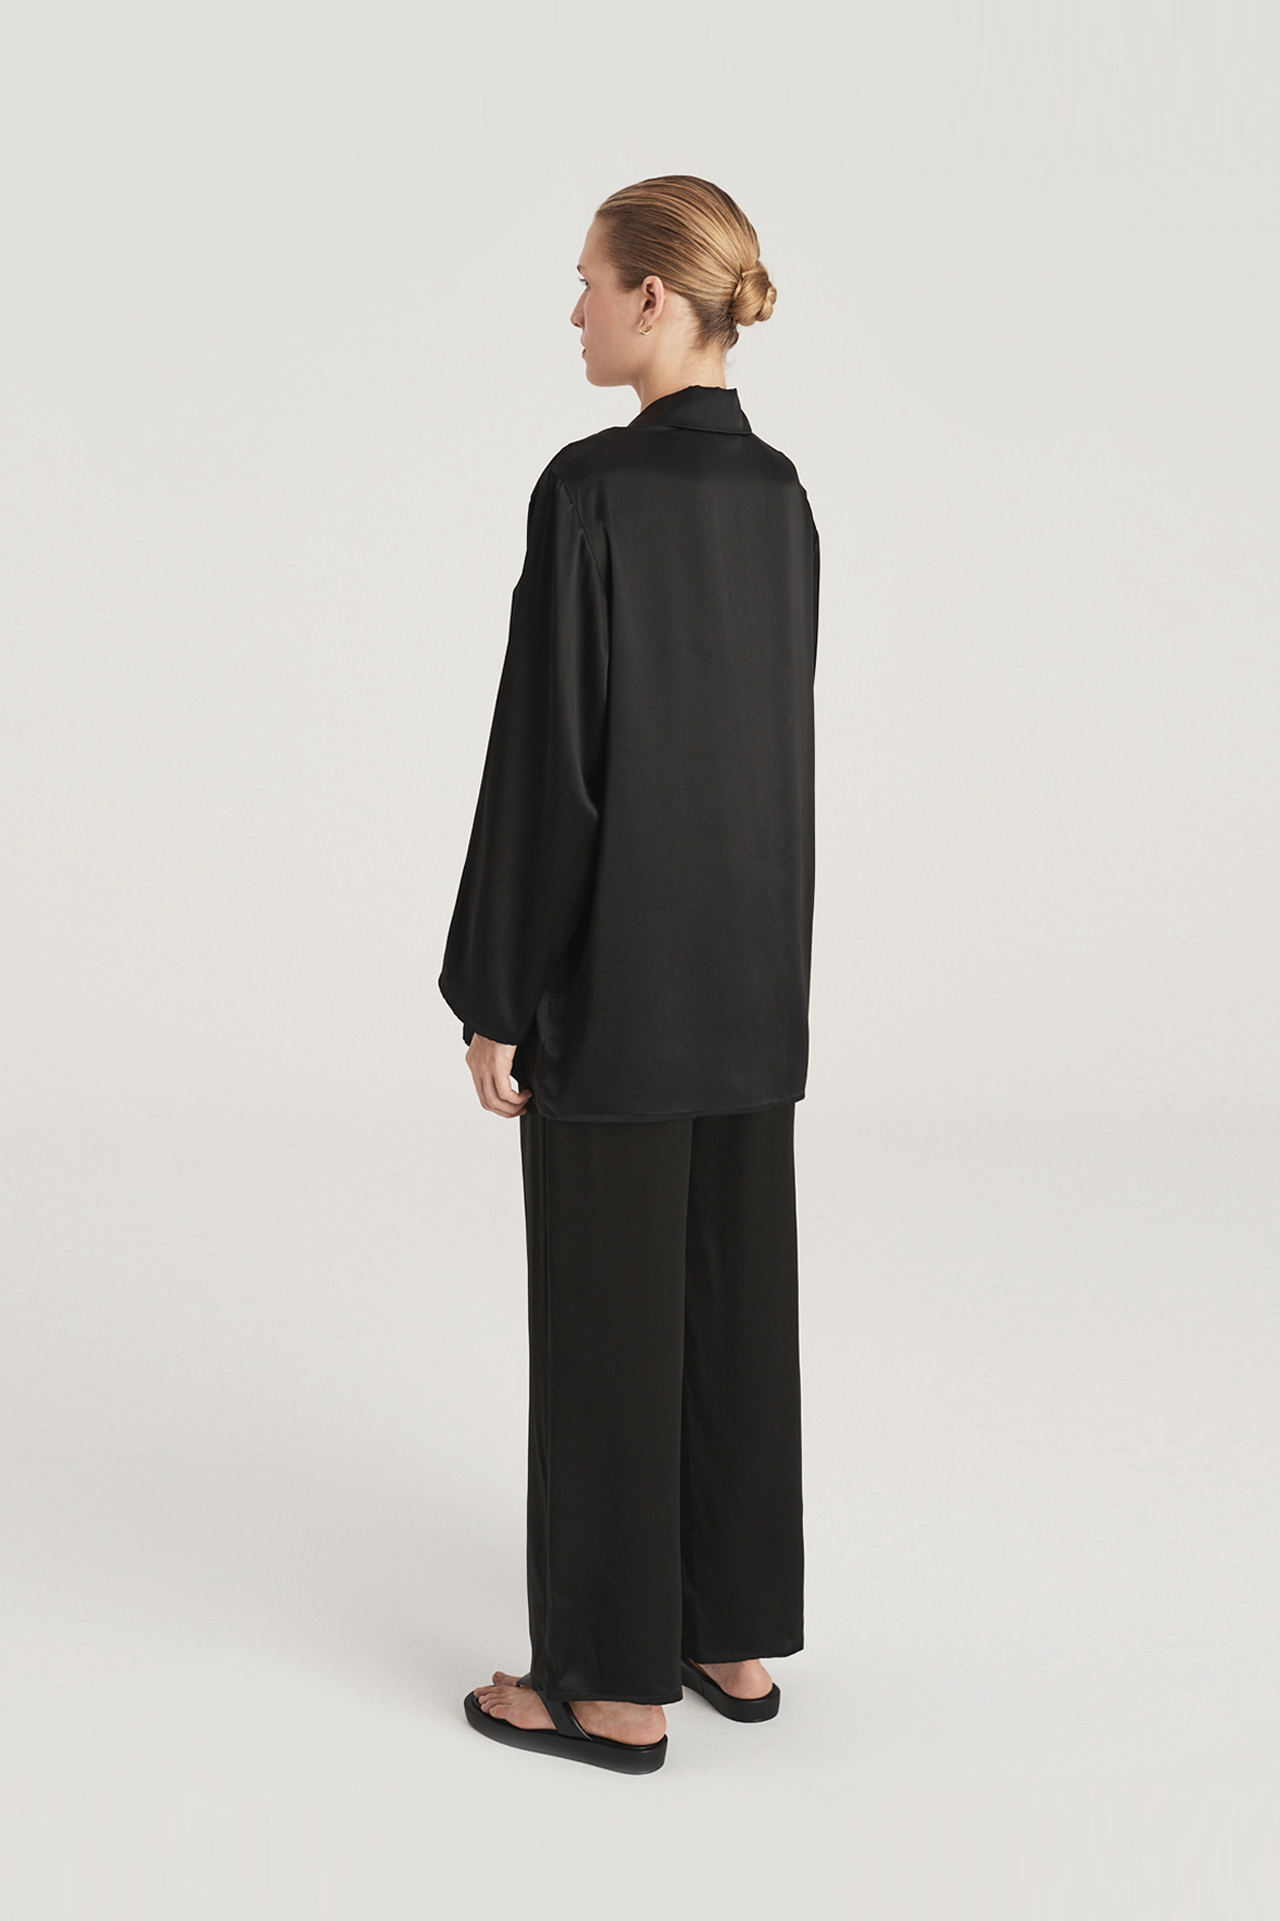 Silk satin pyjama set: black oversized shirt and wide leg pants